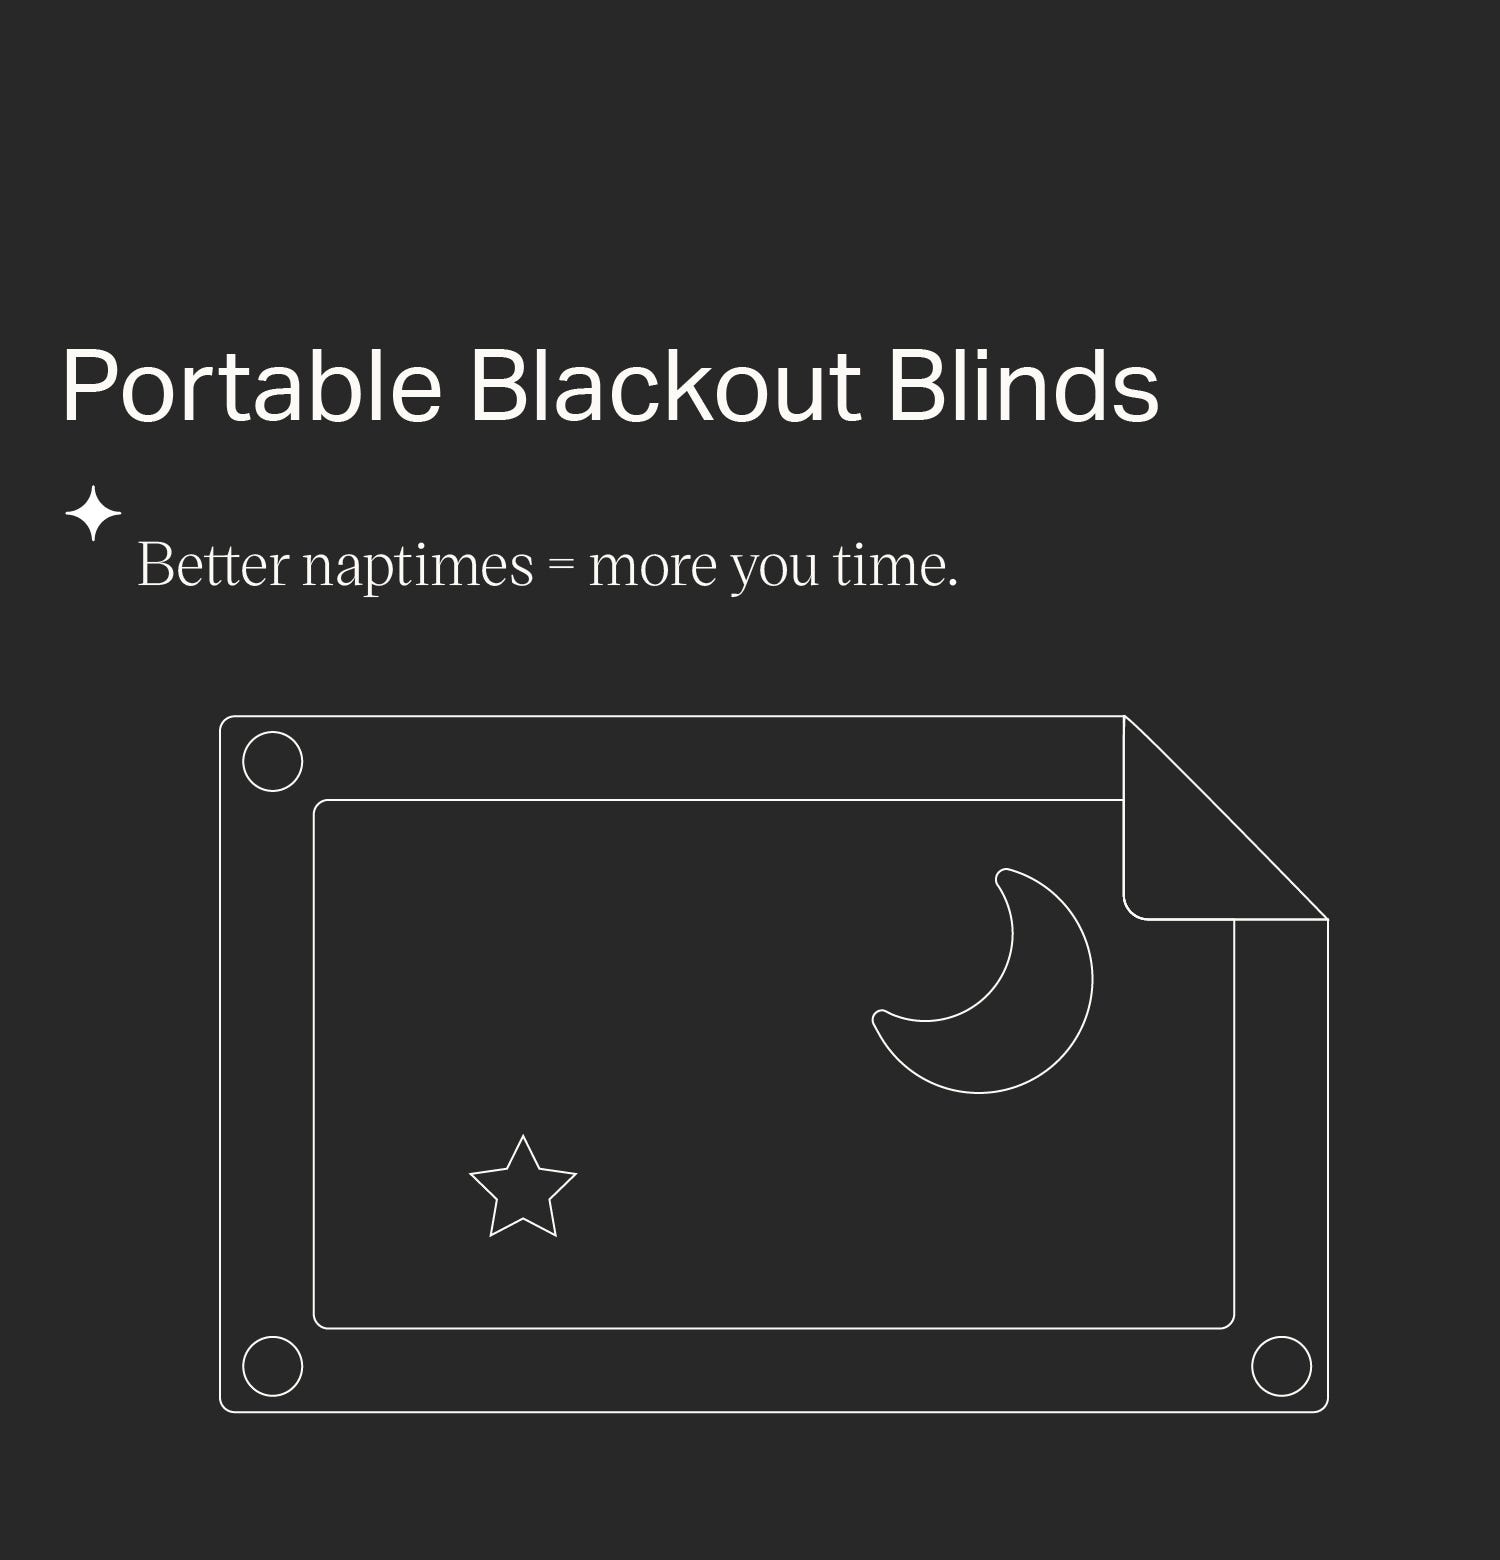 Portable Blackout Blinds